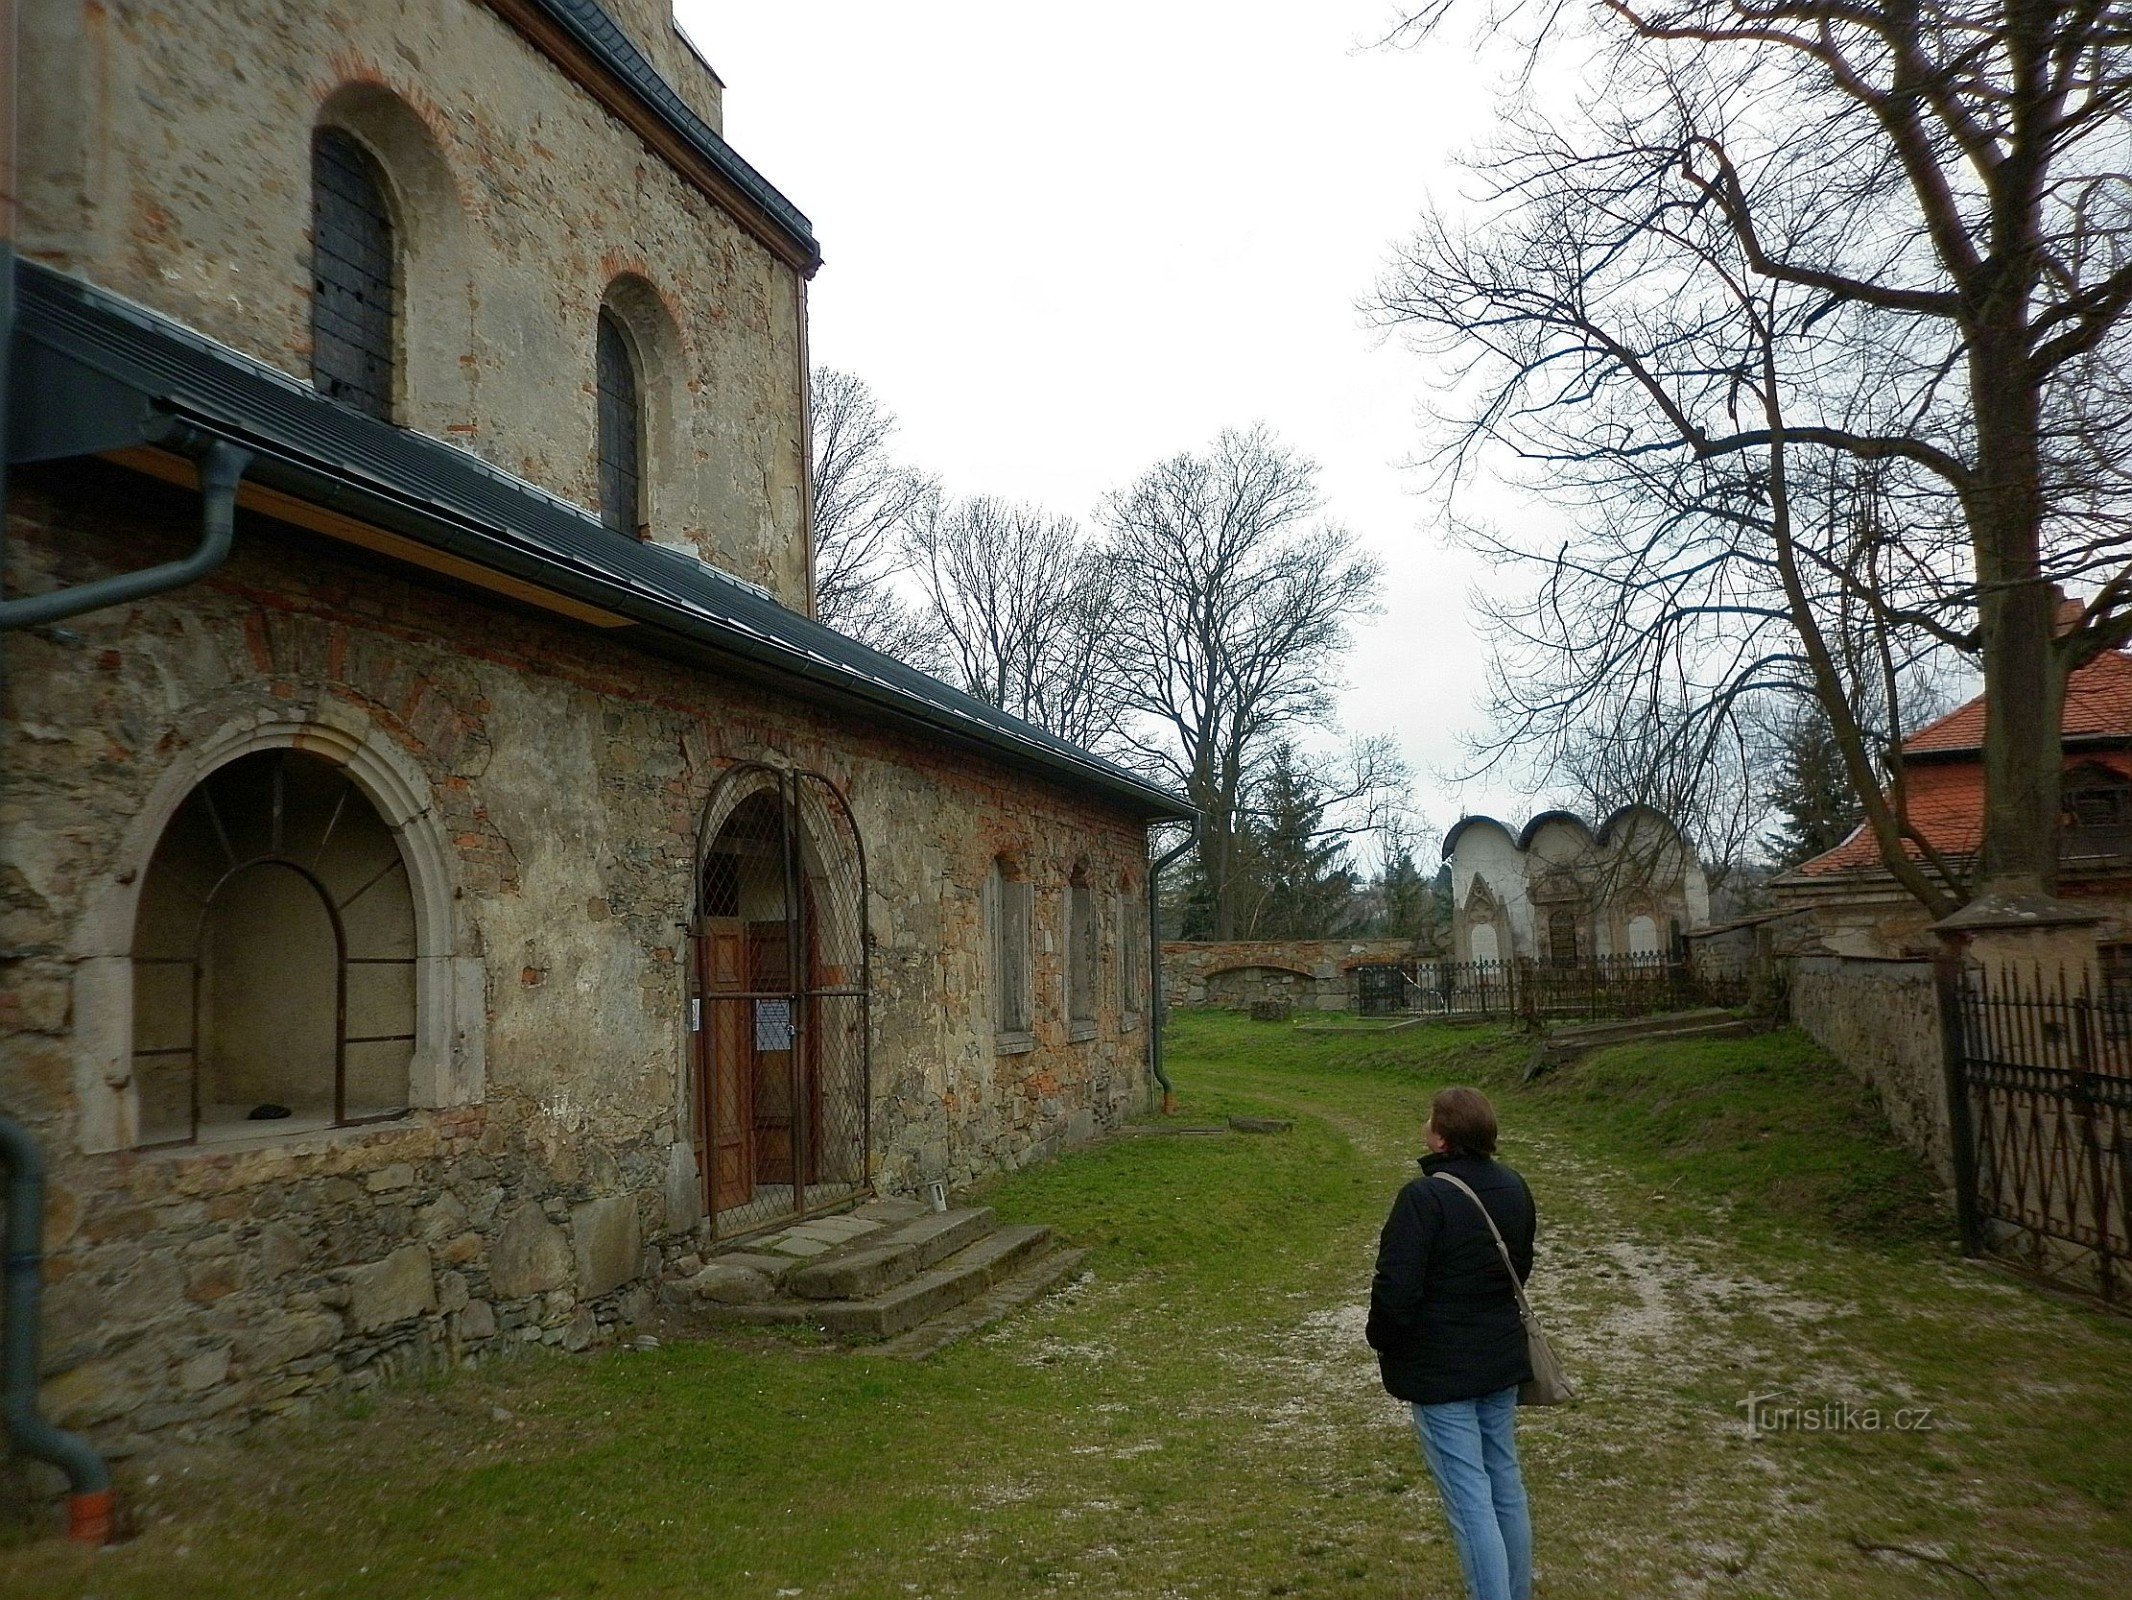 Horní Slavkov - Kerk van St. George